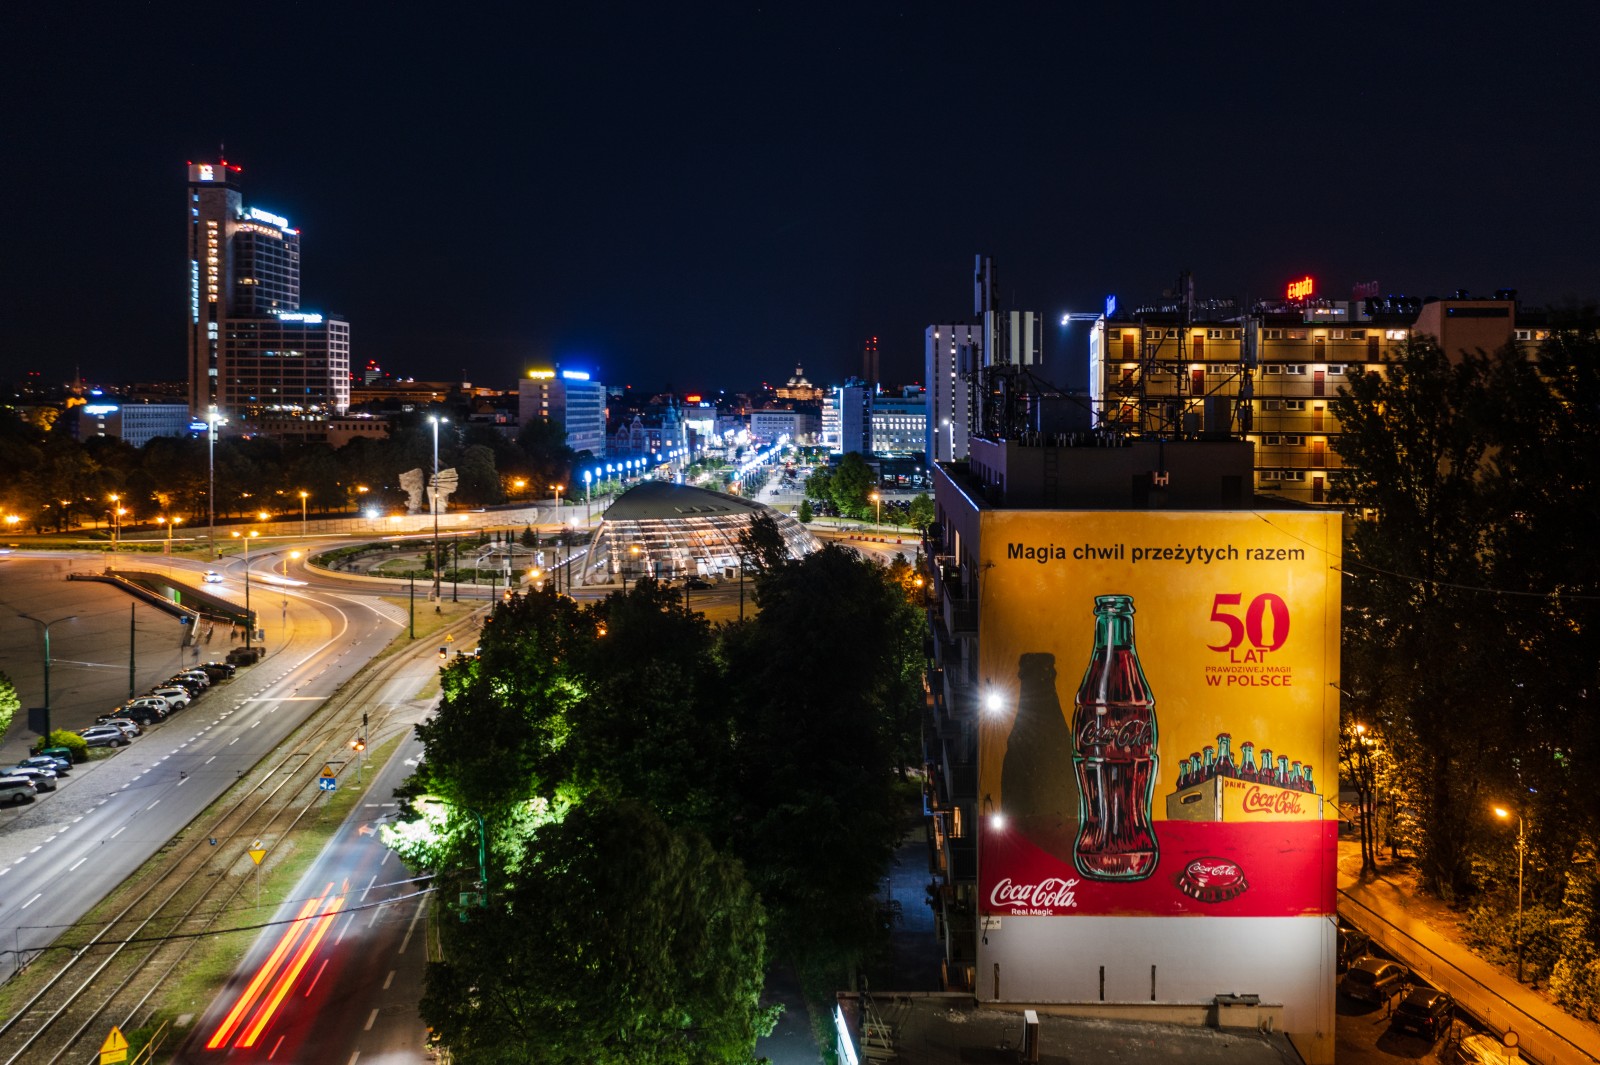 Mural on the occasion of the 50th anniversary of Coca-Cola in Katowice | 50 lat prawdziwej magii w Polsce (retro) | Portfolio